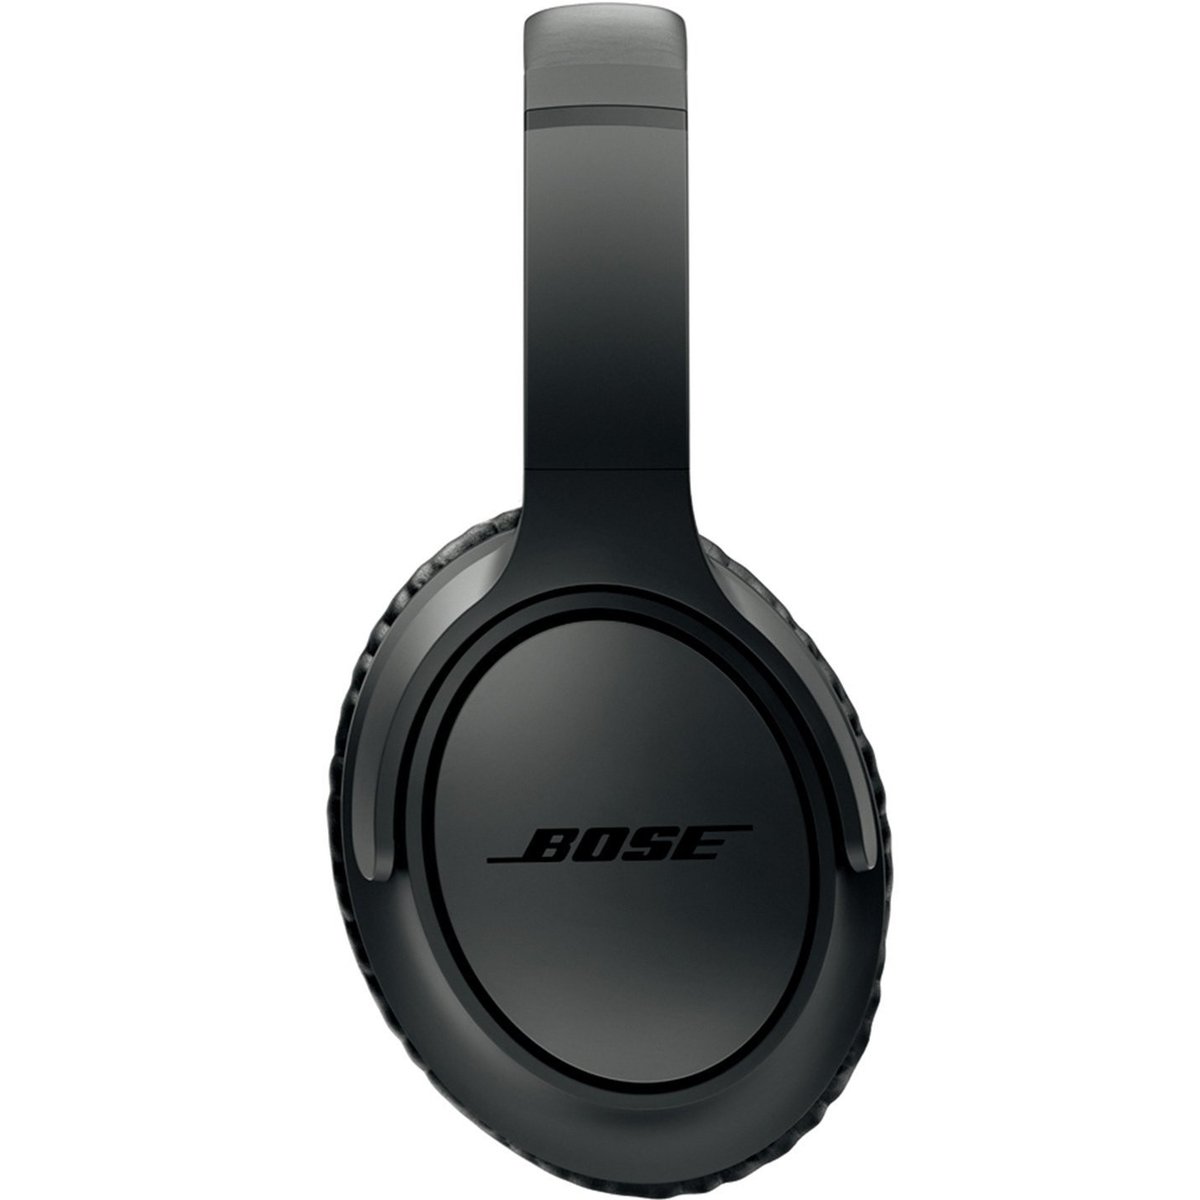 Bose Around-Ear Headphones SoundTrue II Charcoal Black